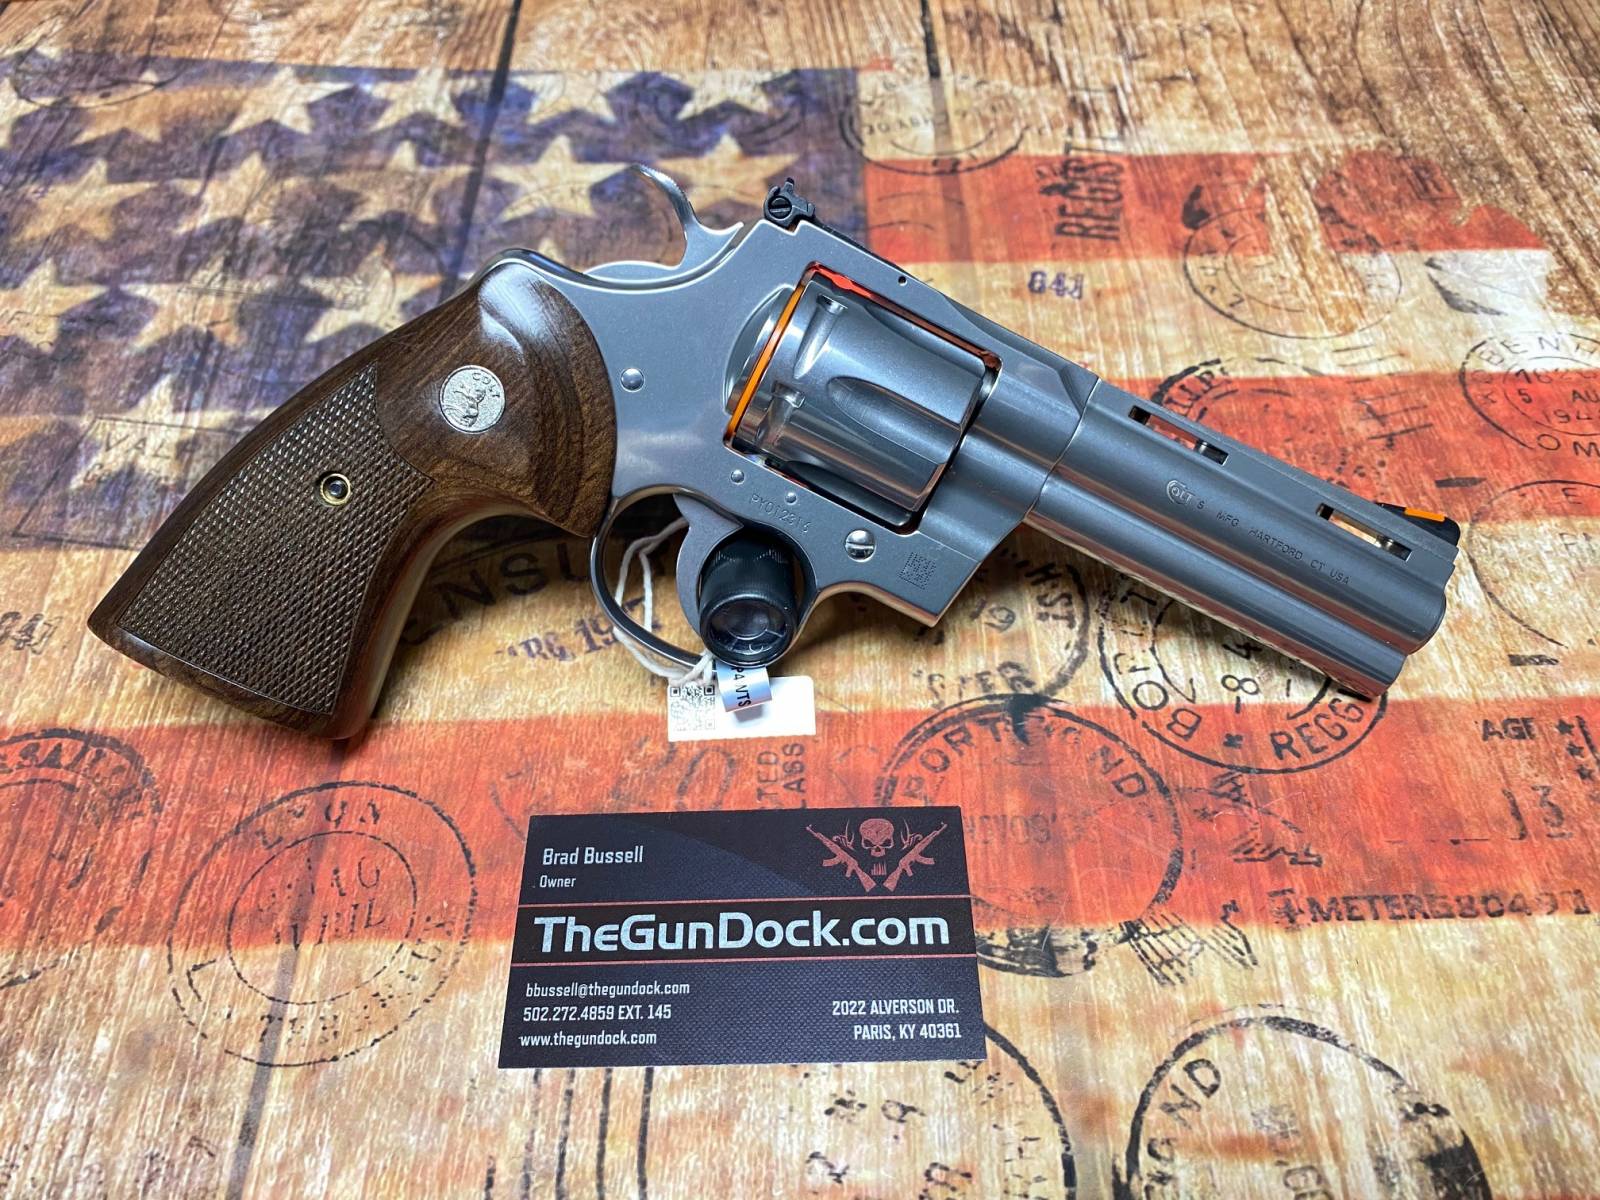 Colt Python .357 Magnum Revolver 4.25" Barrel 6-Rounds Walnut Target Grips Semi-Bright Stainless Steel Finish